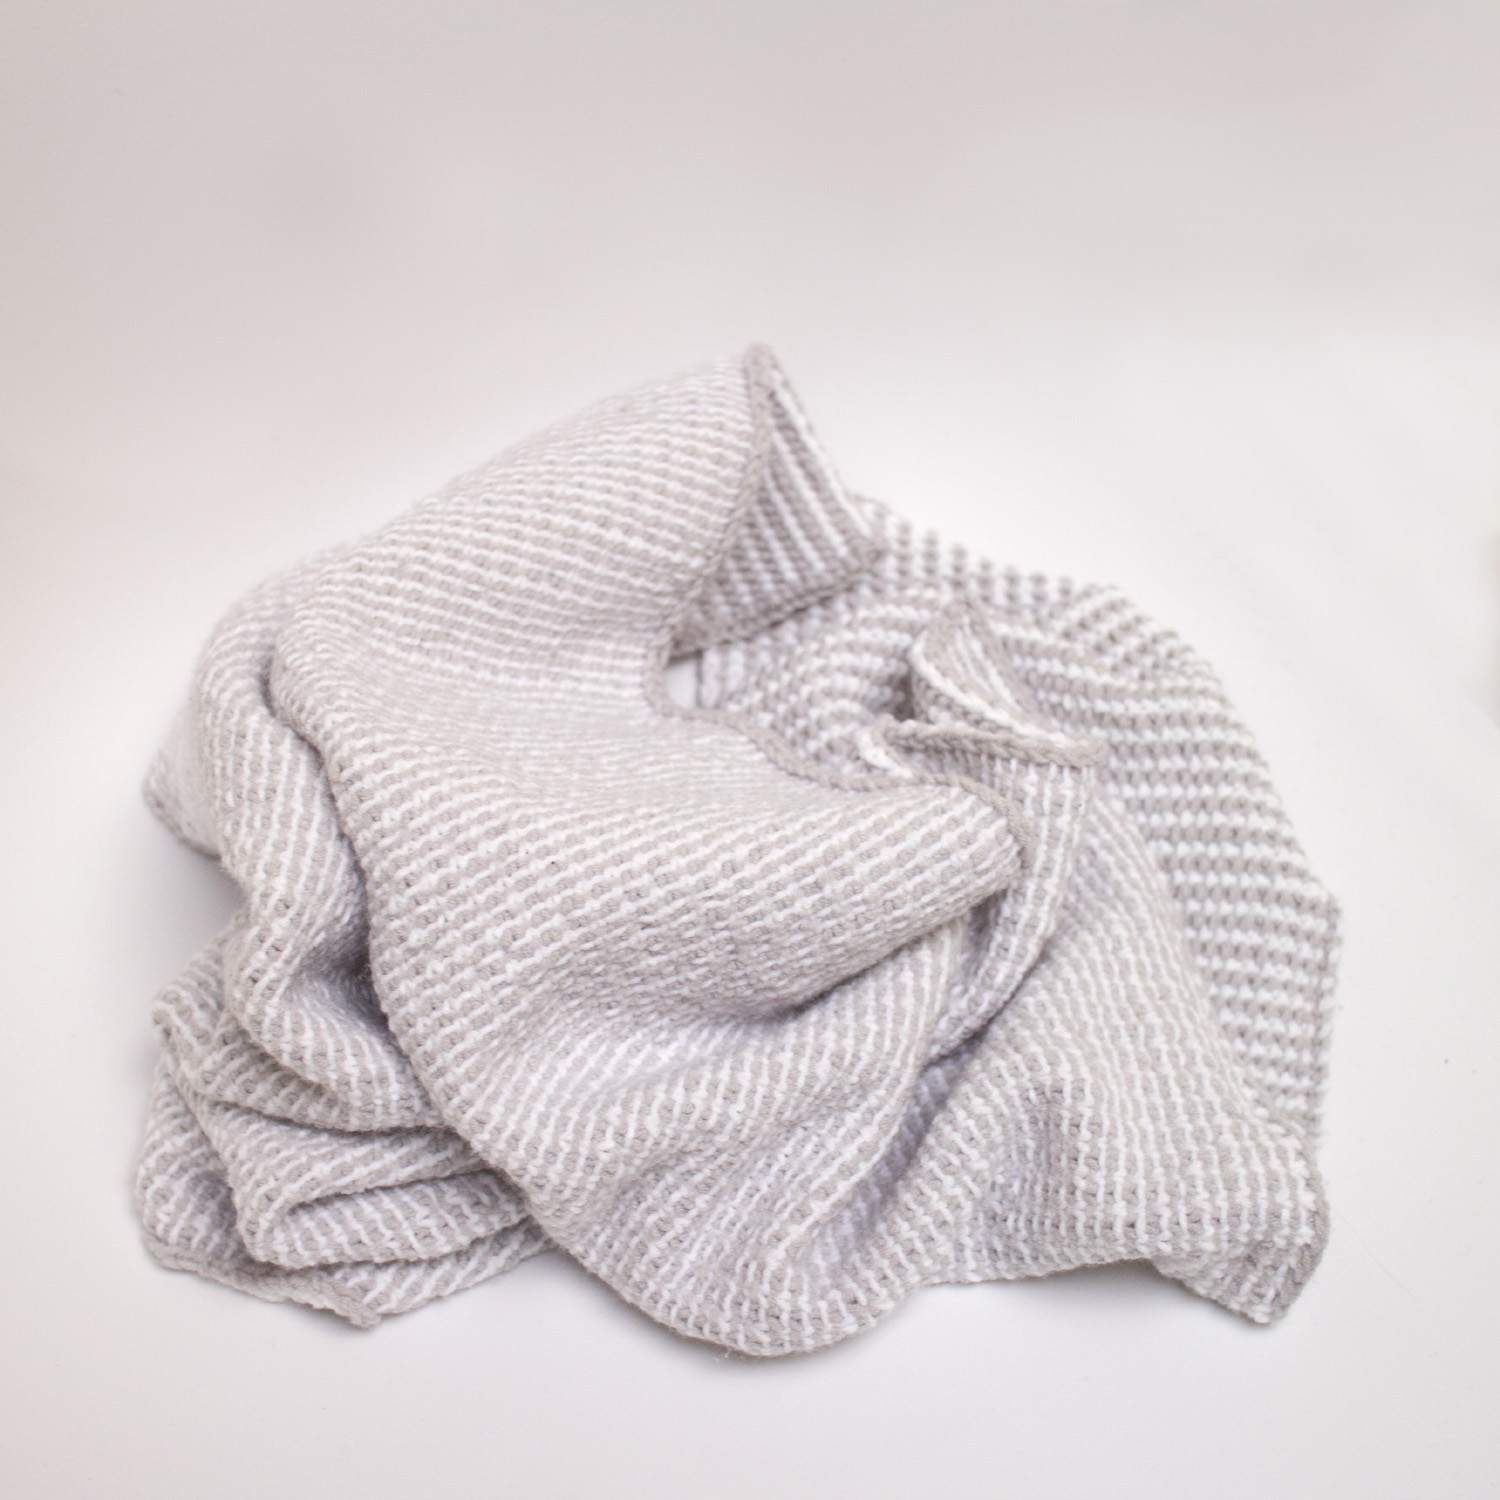 knit-baby-blanket-3-sml